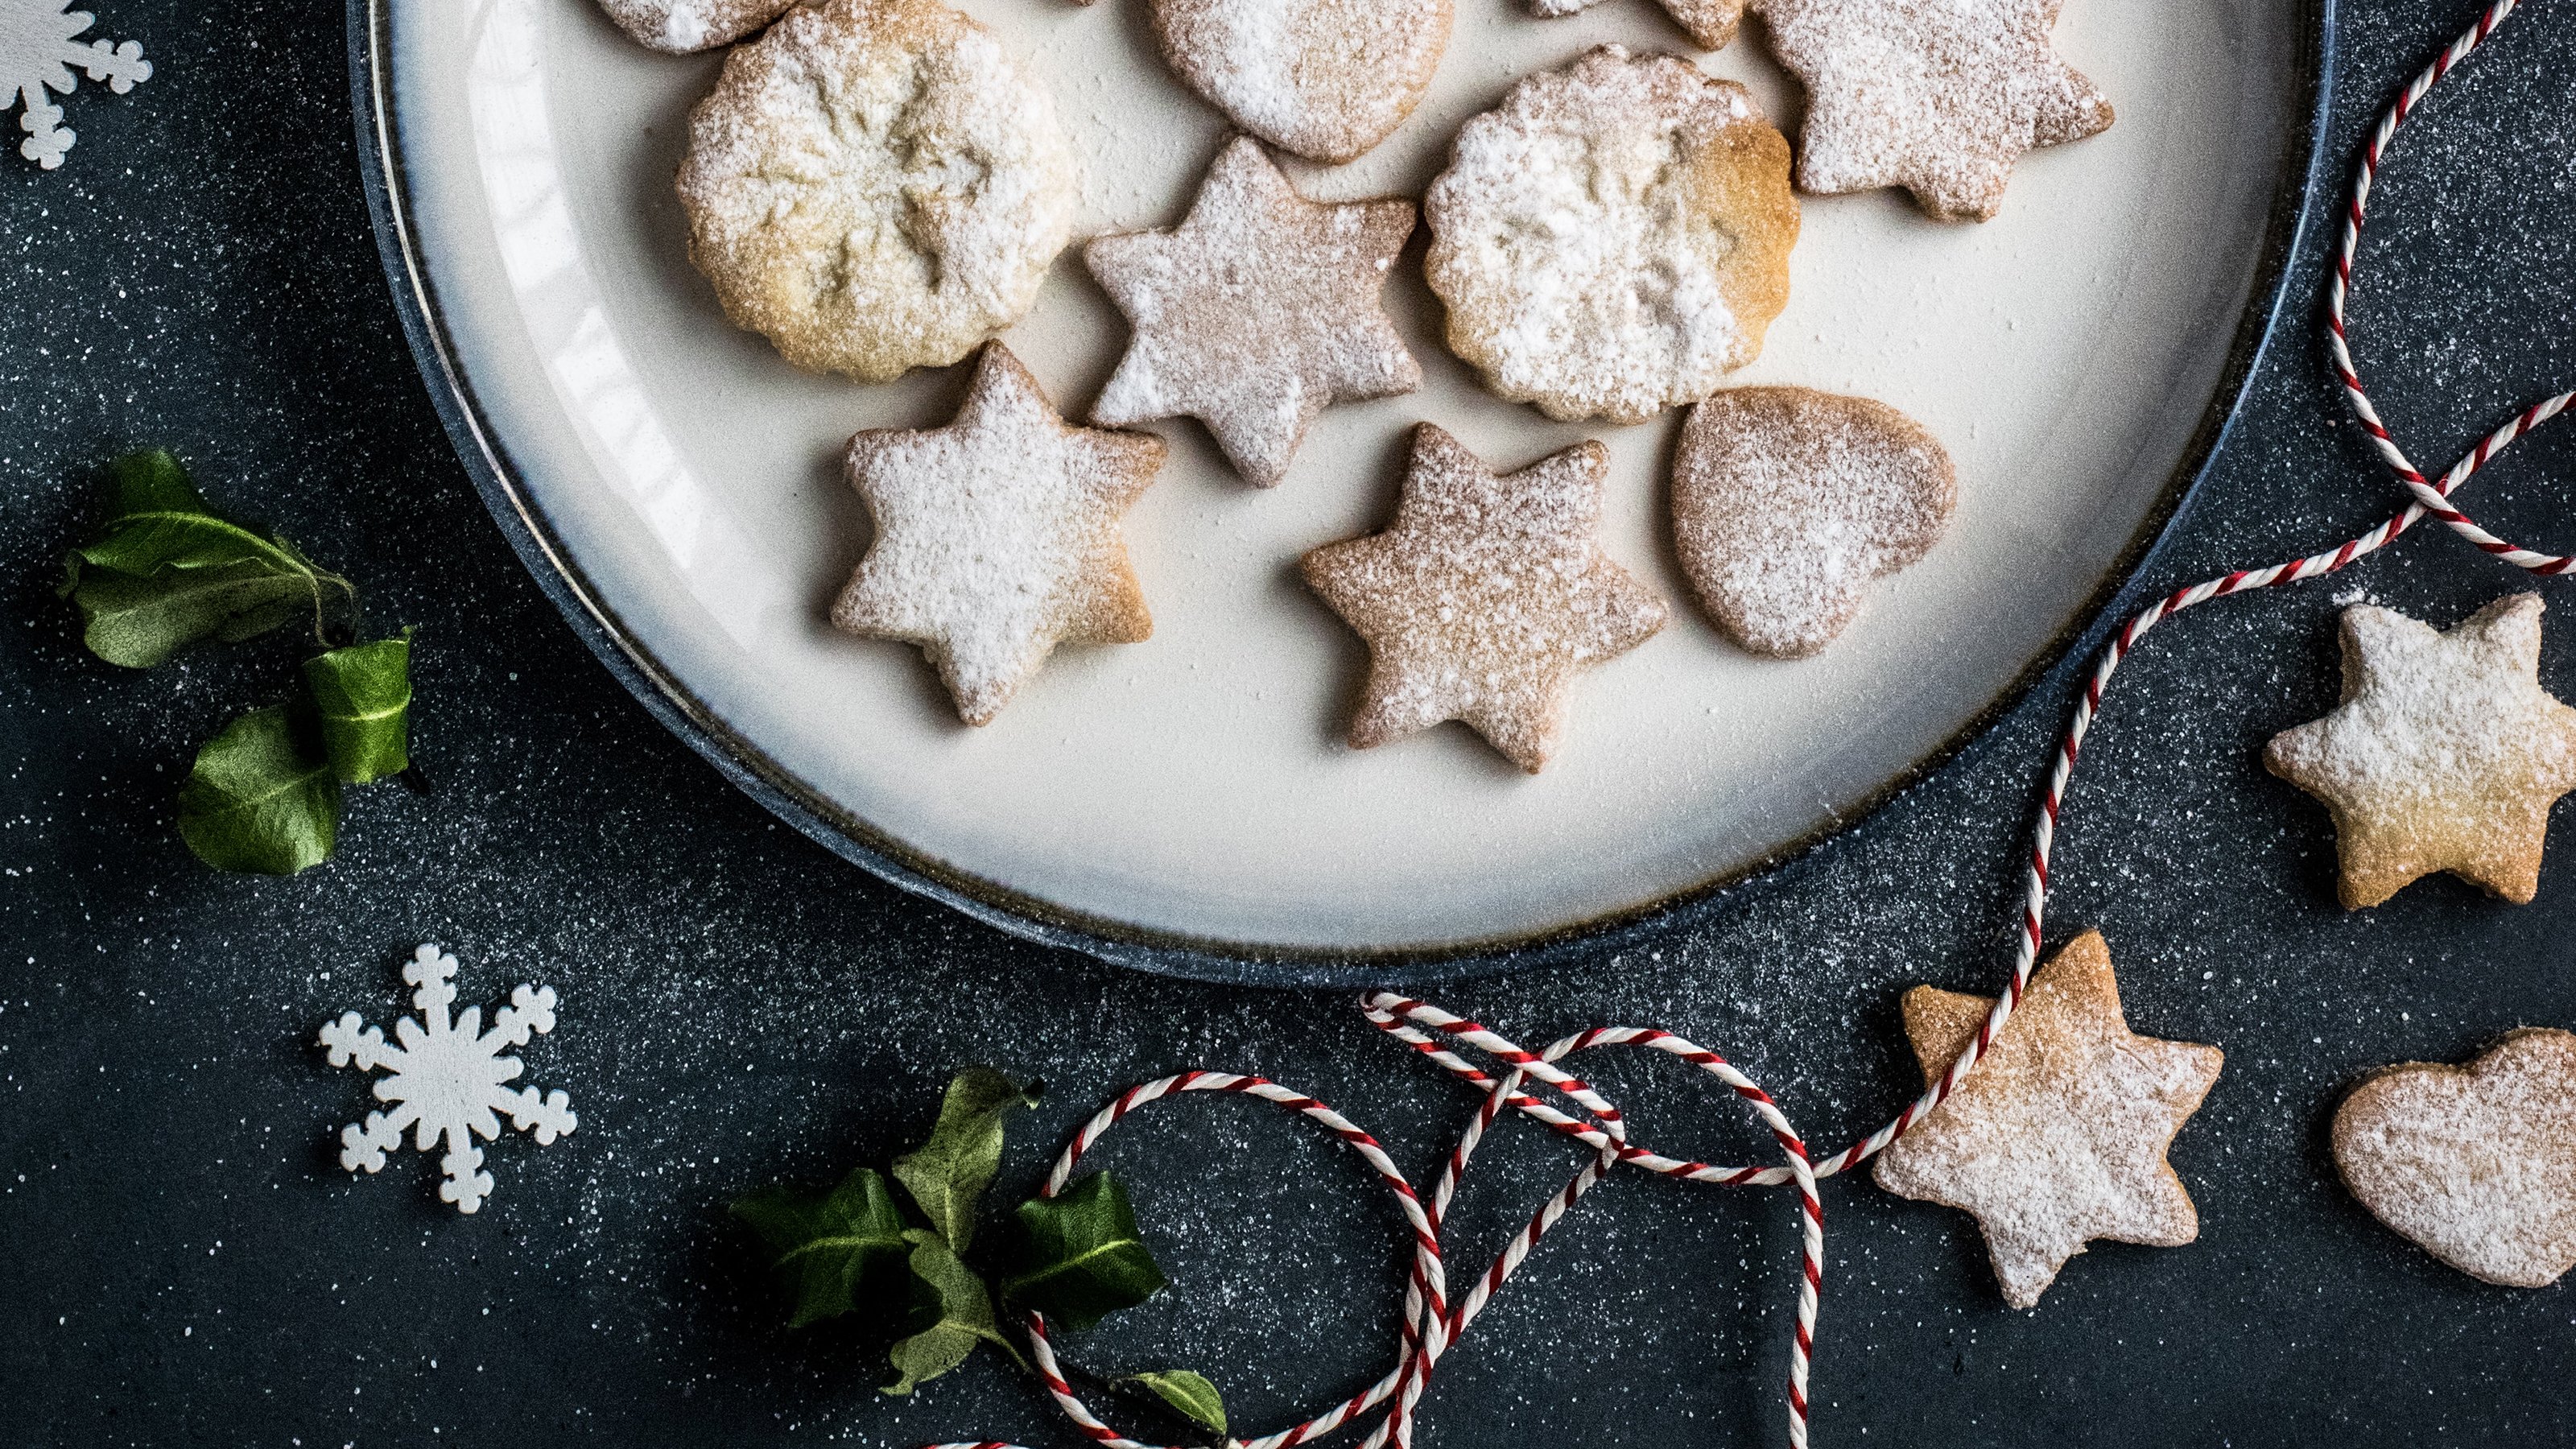 Baking Cookies by Monika Grabkowska on Unsplash